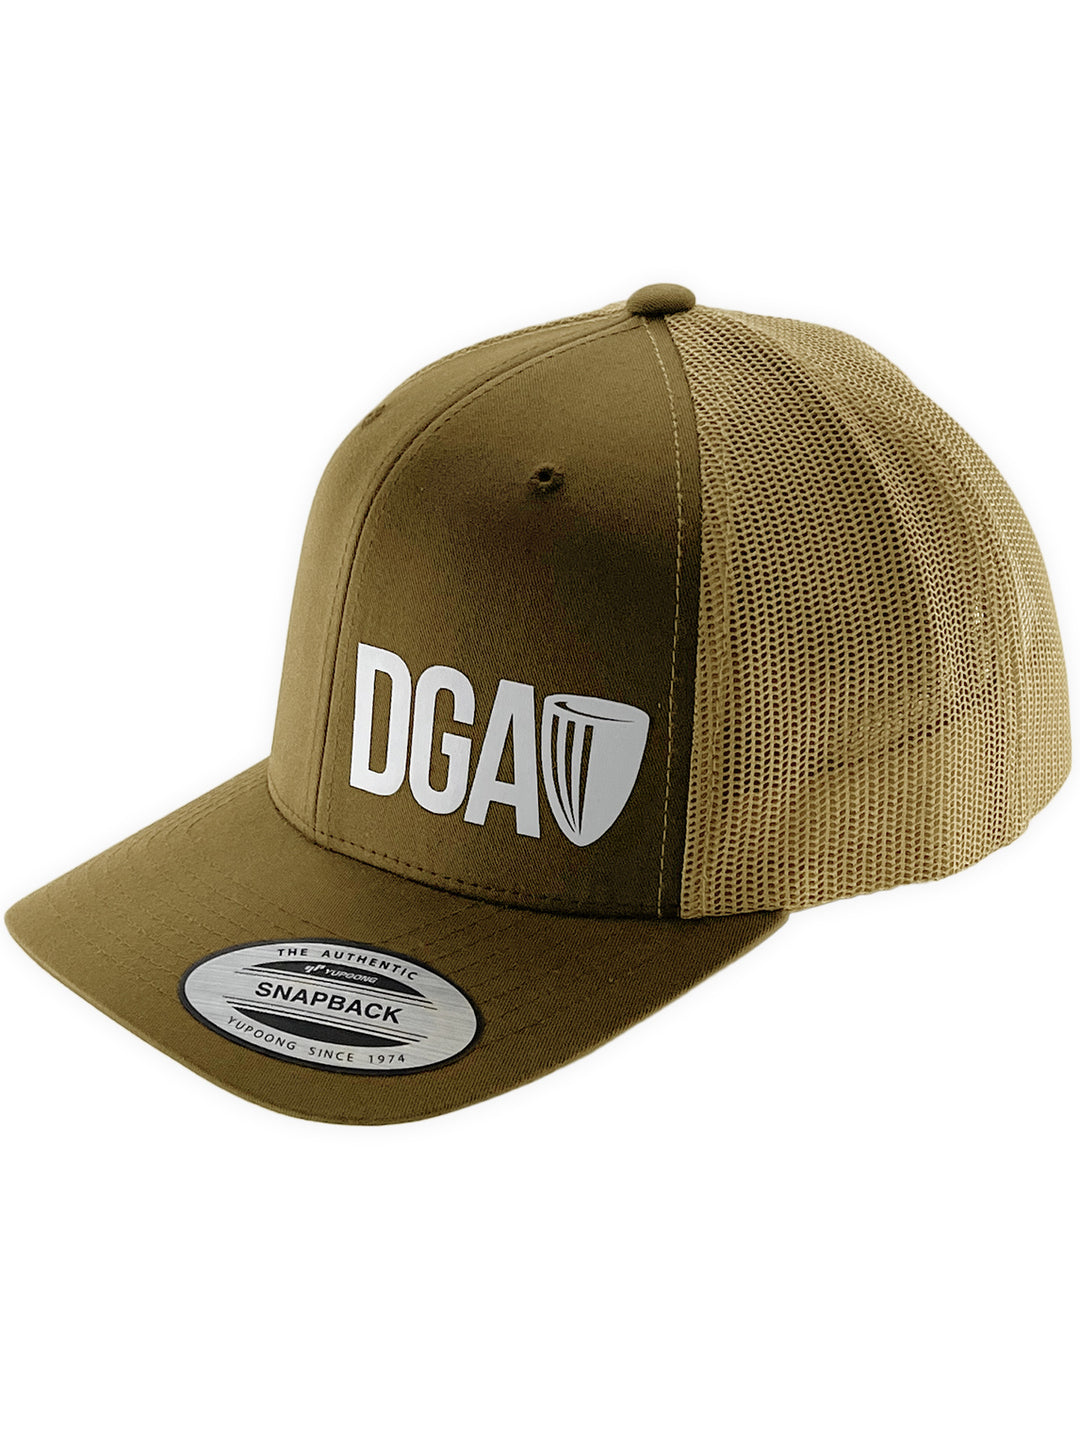 DGA Curved Mesh Snapback Hat